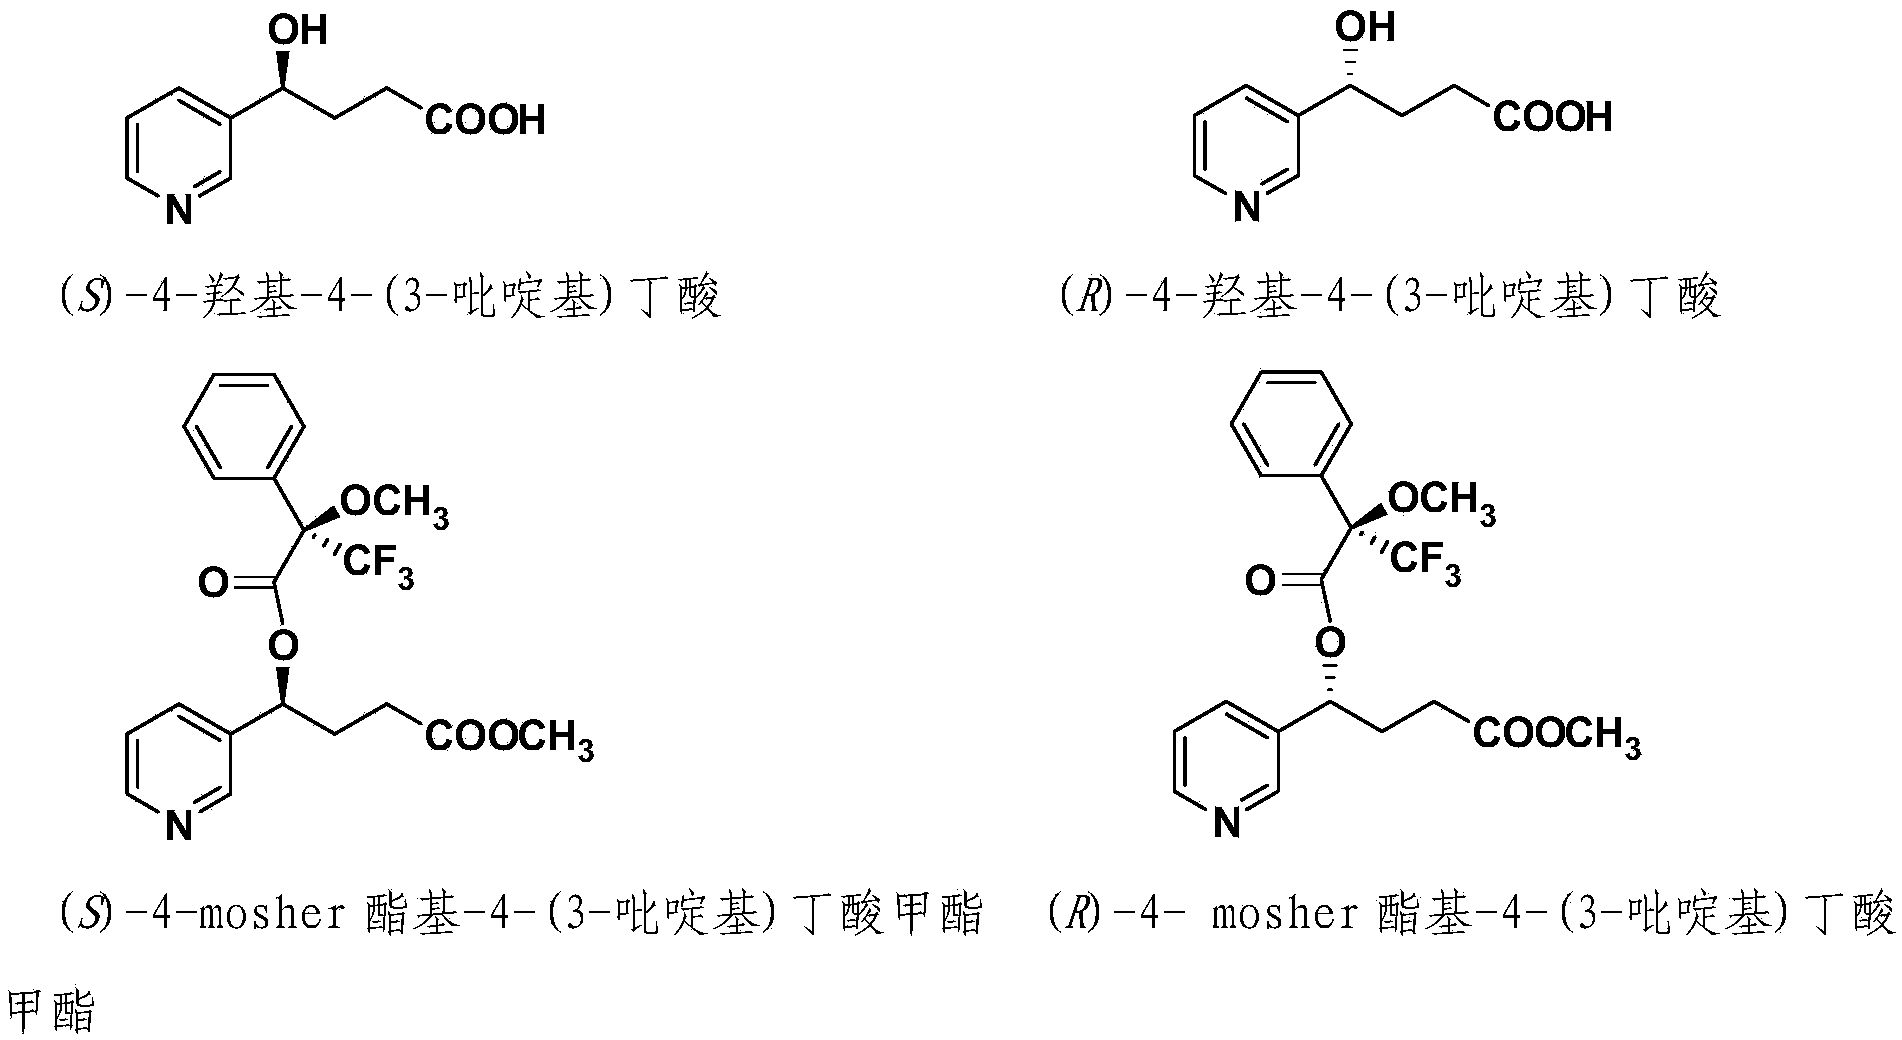 Method for detecting 4-hydroxyl-4-(3-pyridyl) butyric acid in urine